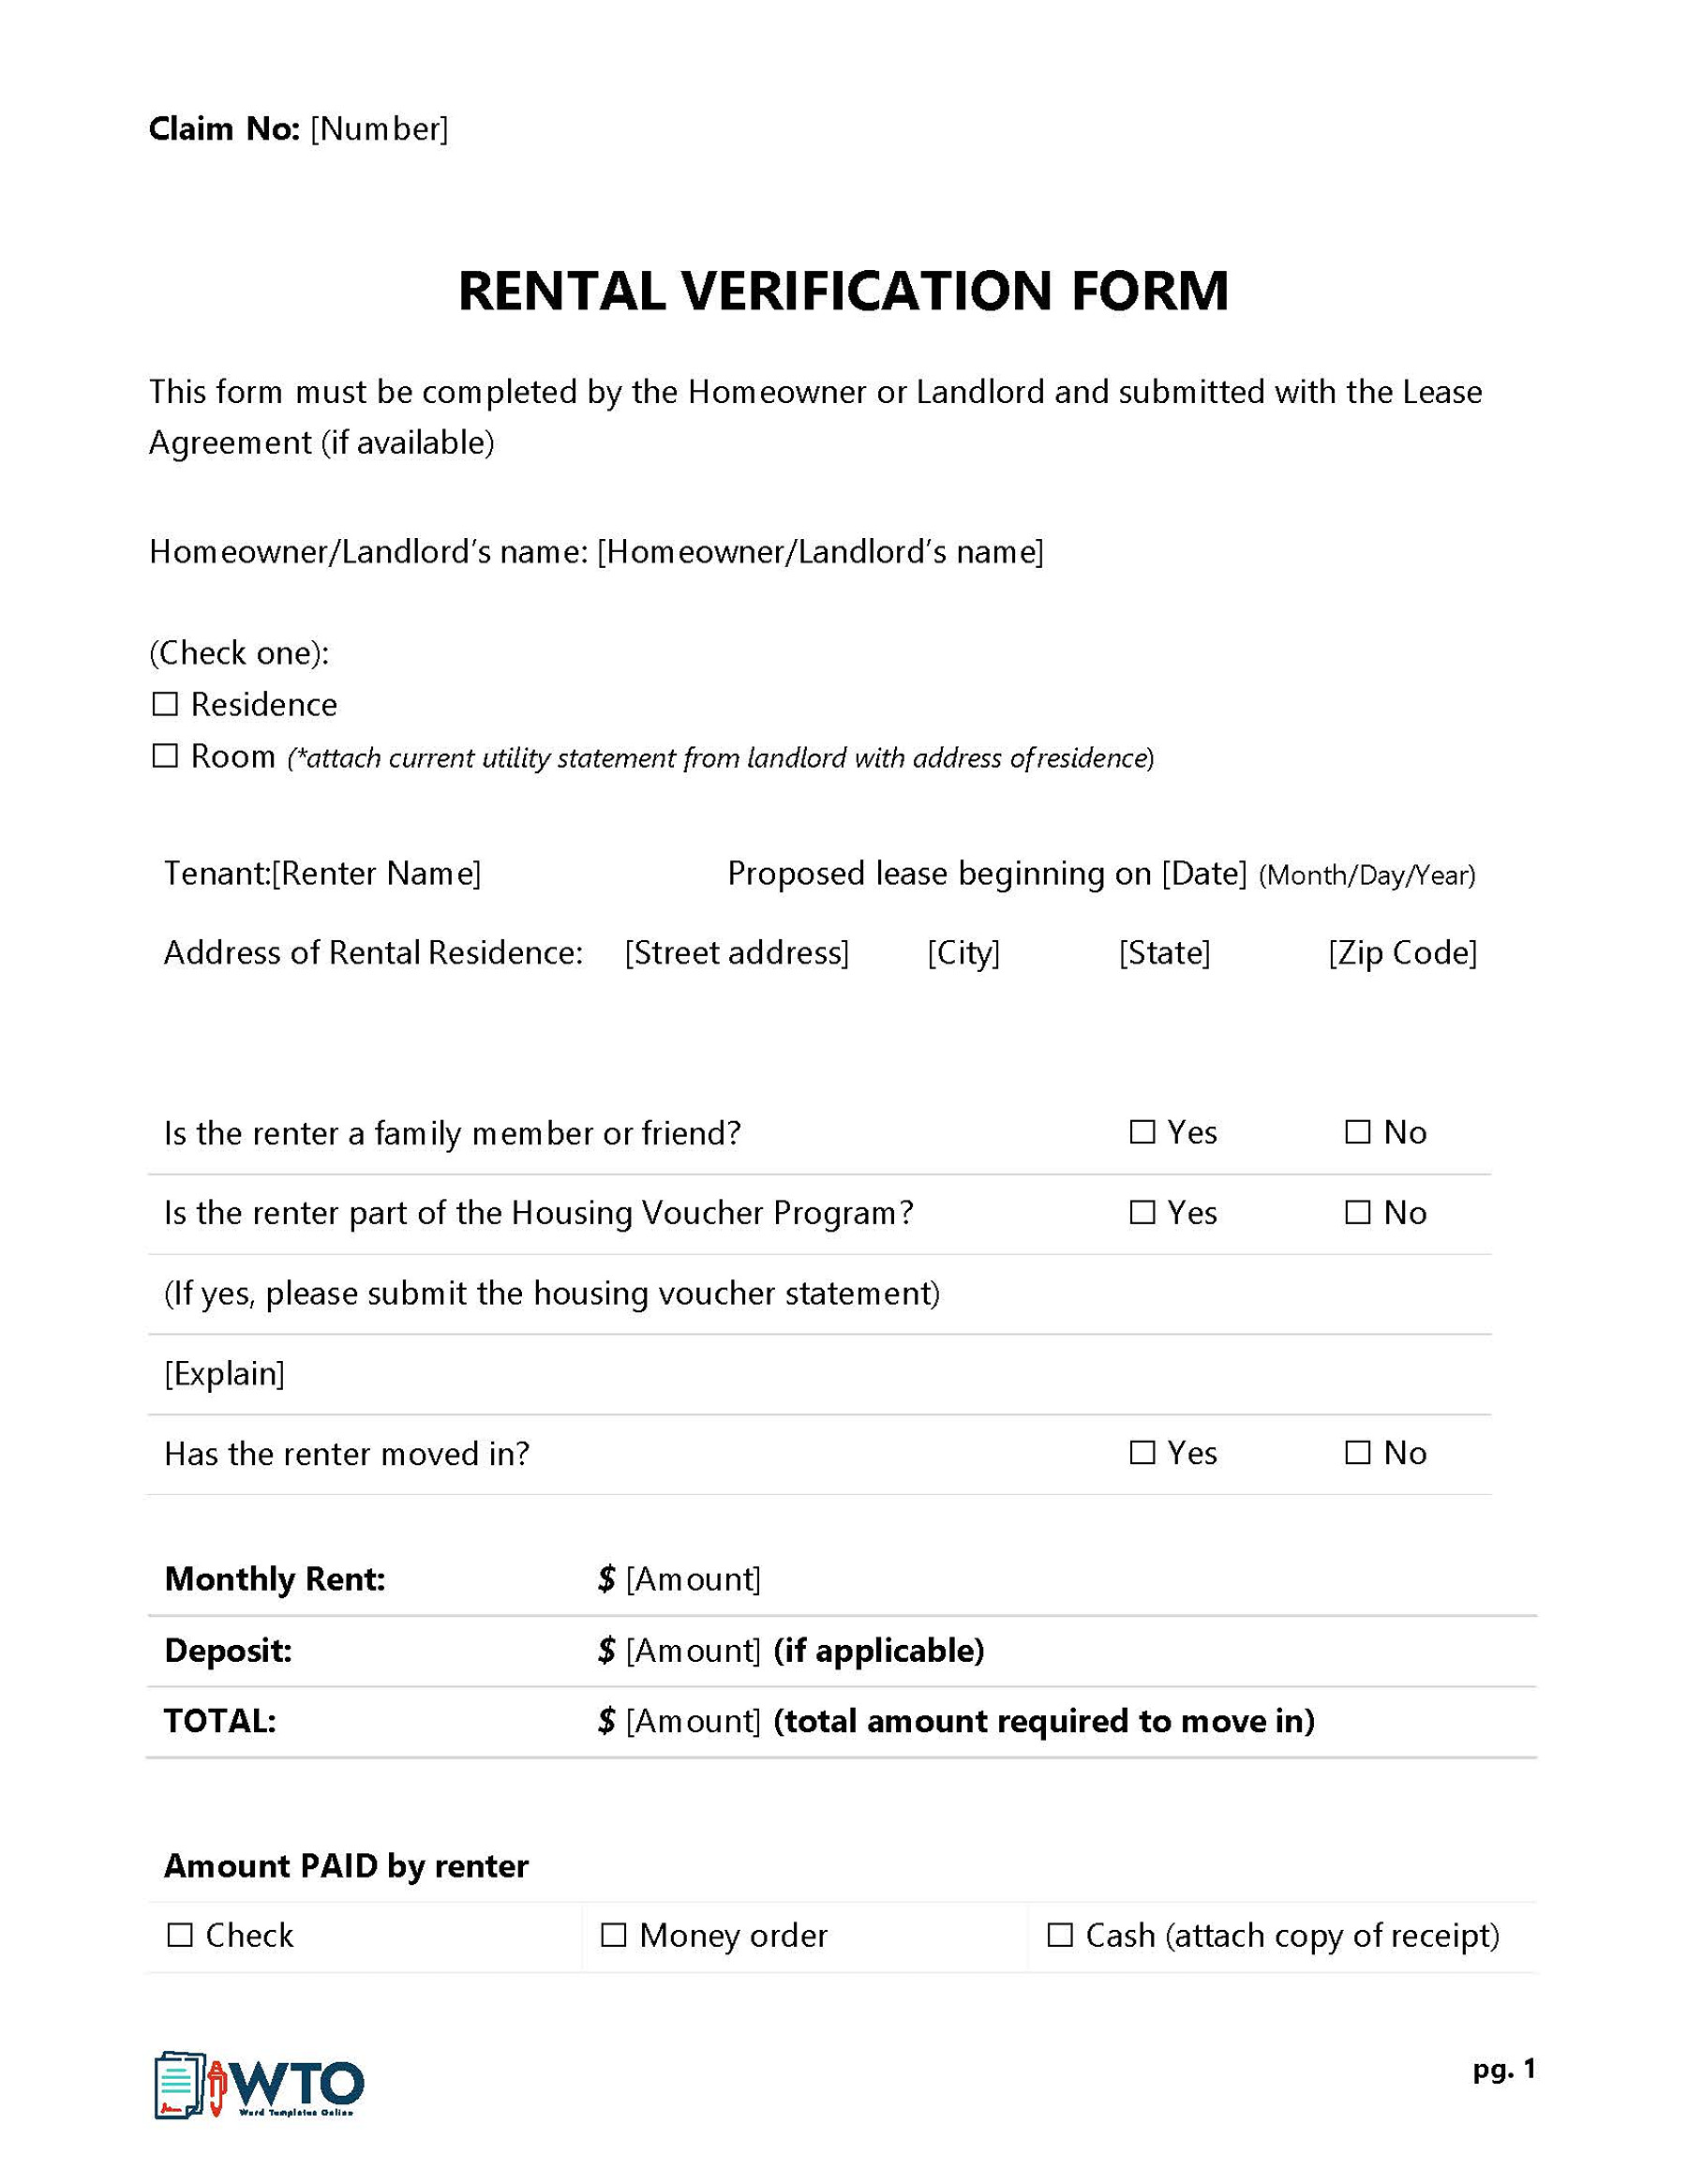 Rental Verification Form Example - Sample Document